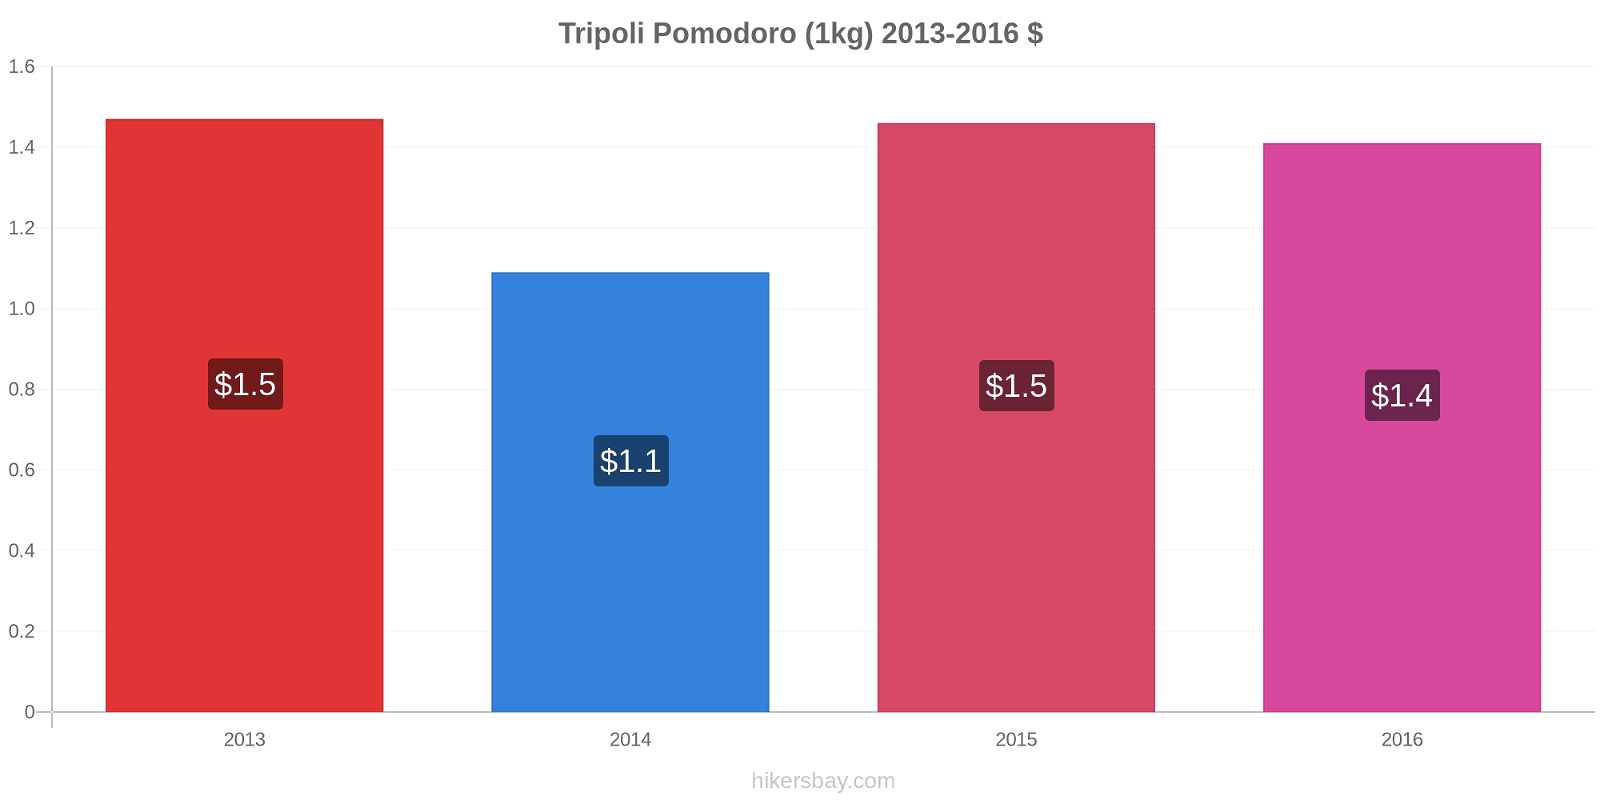 Tripoli variazioni di prezzo Pomodoro (1kg) hikersbay.com